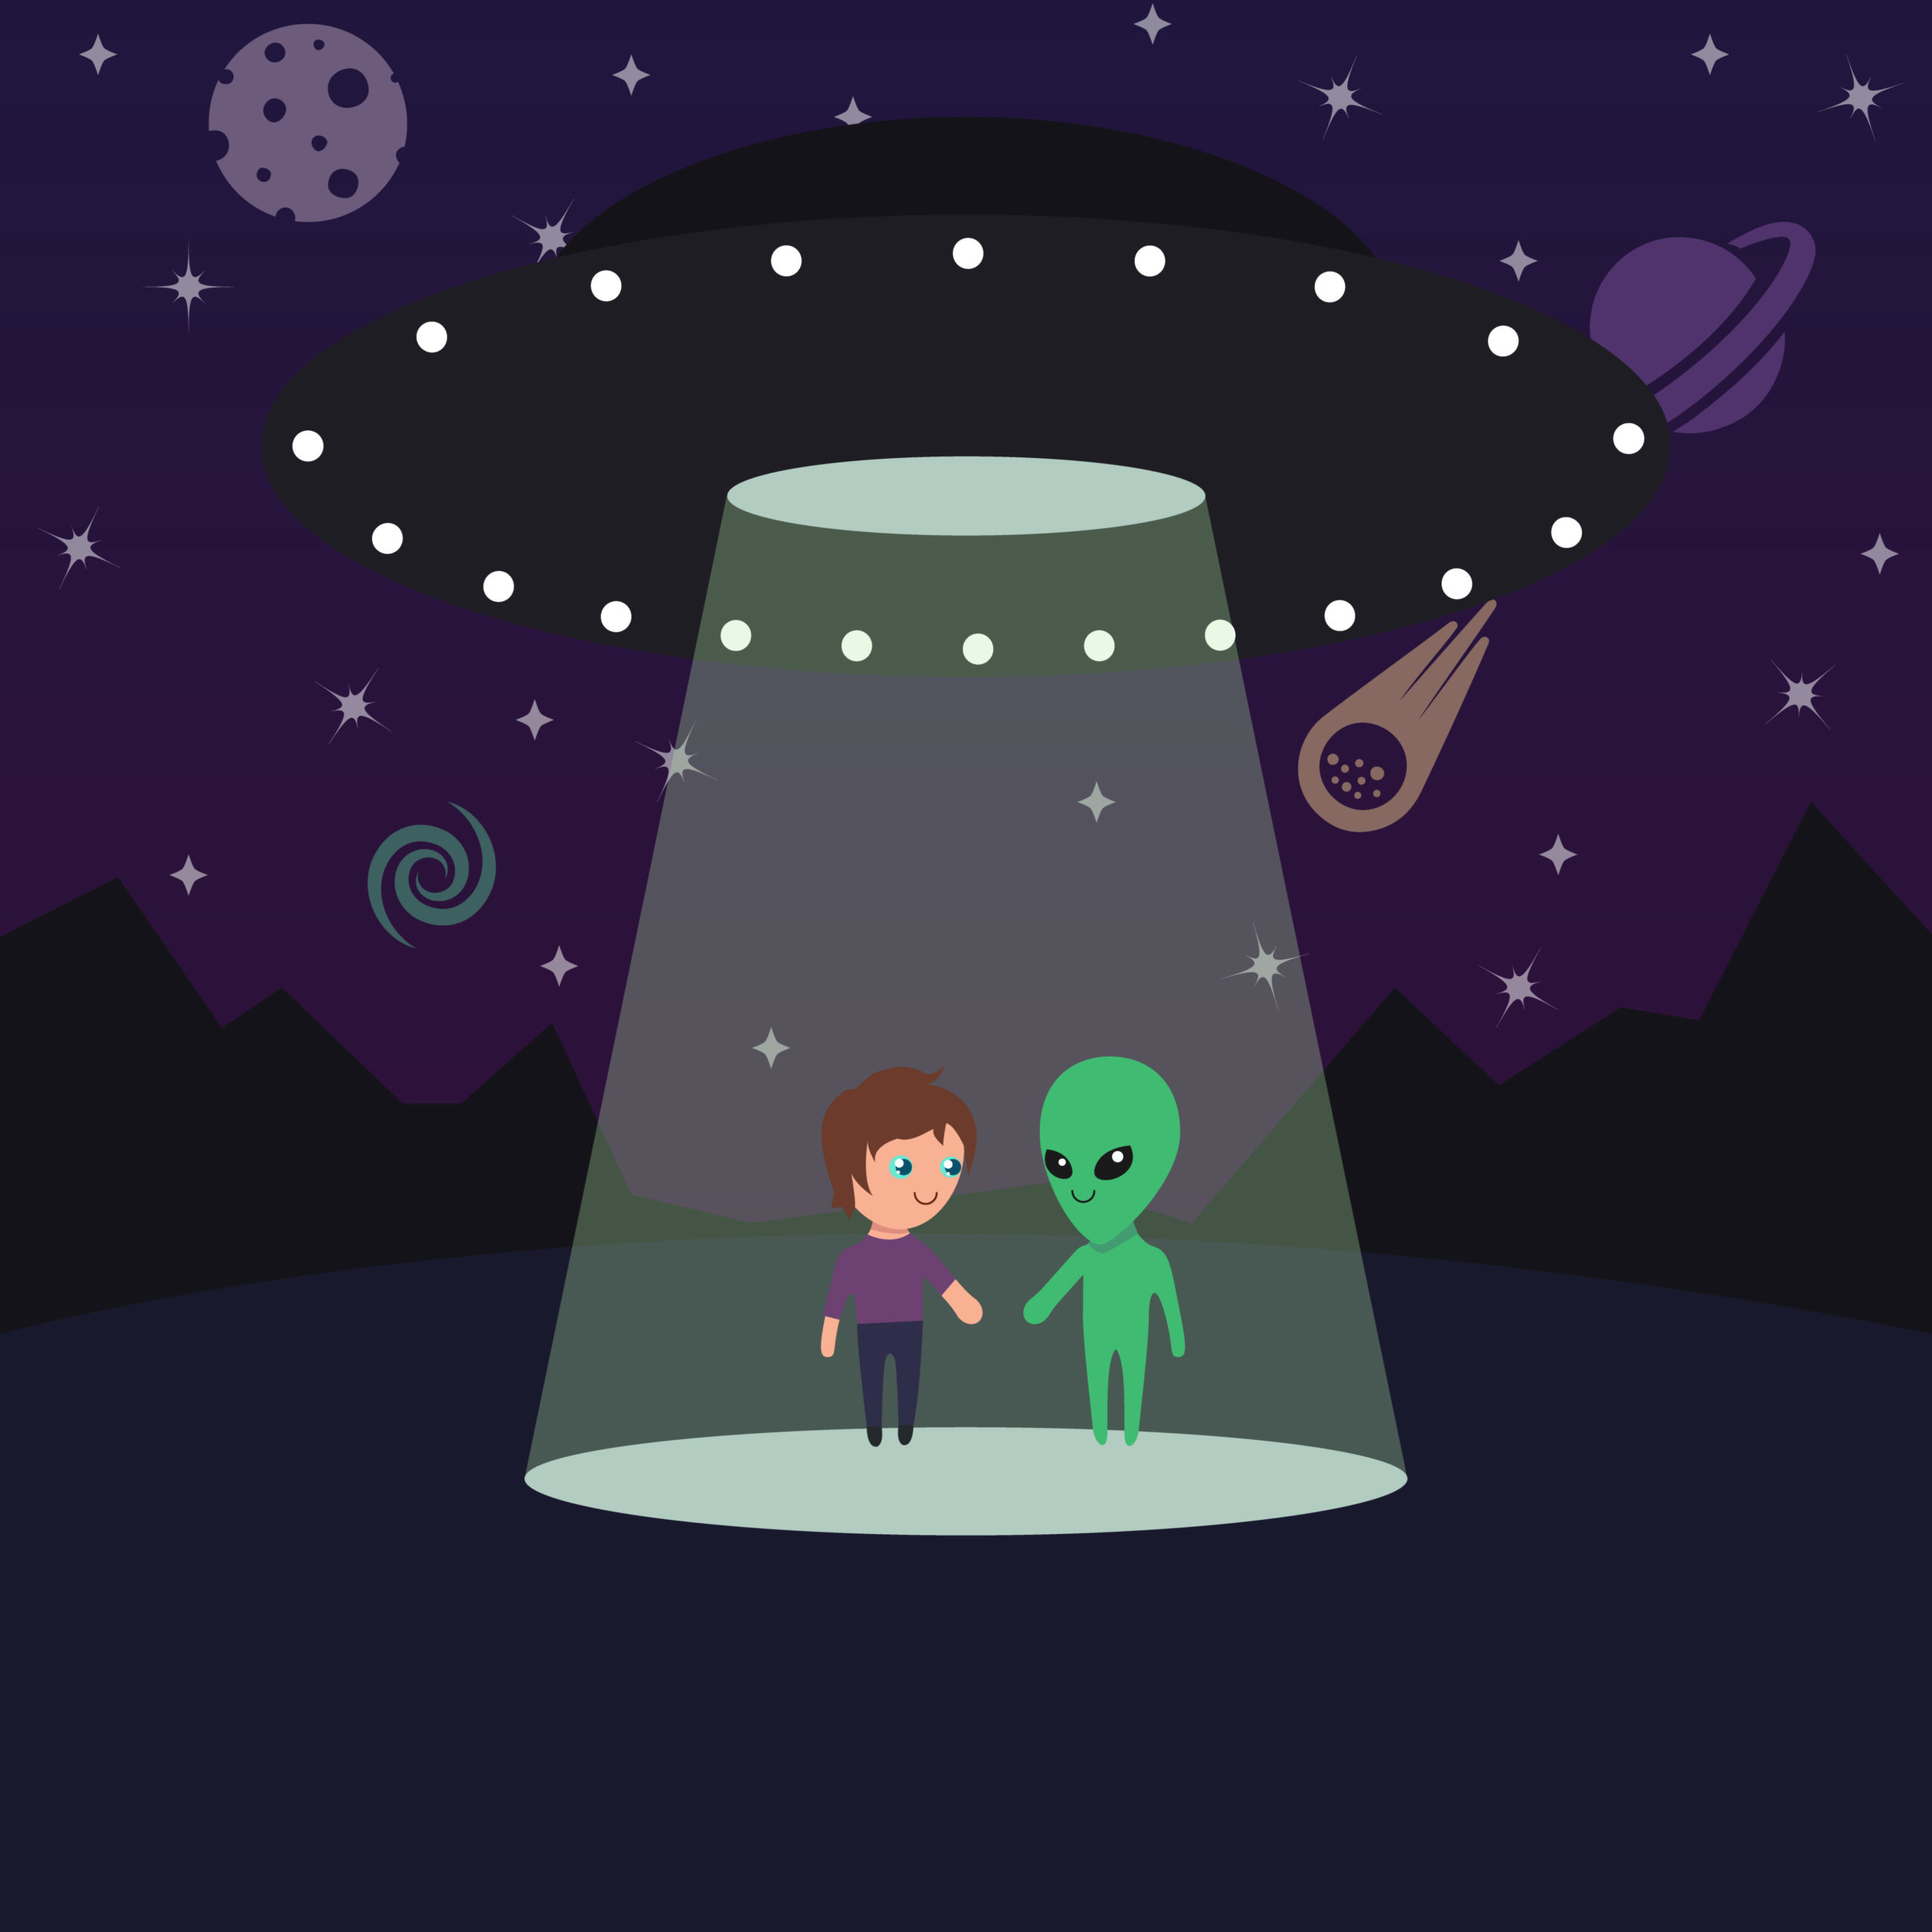 extraterrestrials - https://depositphotos.com/90499330/stock-illustration-human-meets-alien.html